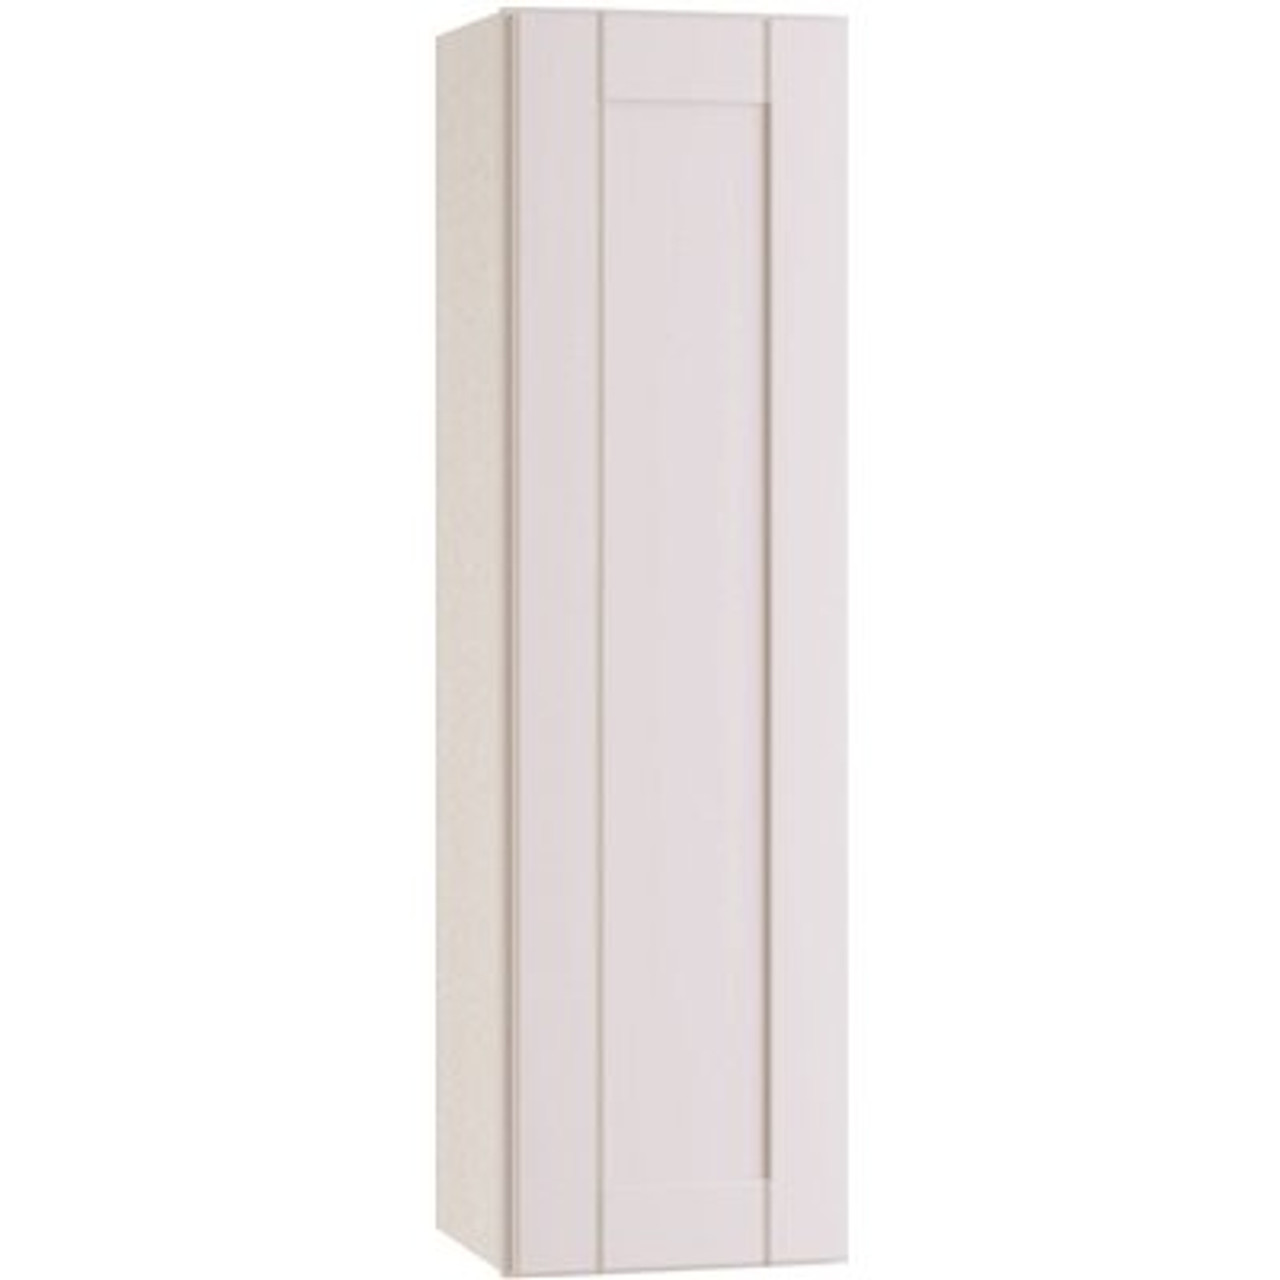 Richmond Shaker Rta Wall Cabinet, Single, Verona White, 9"x42"x12"